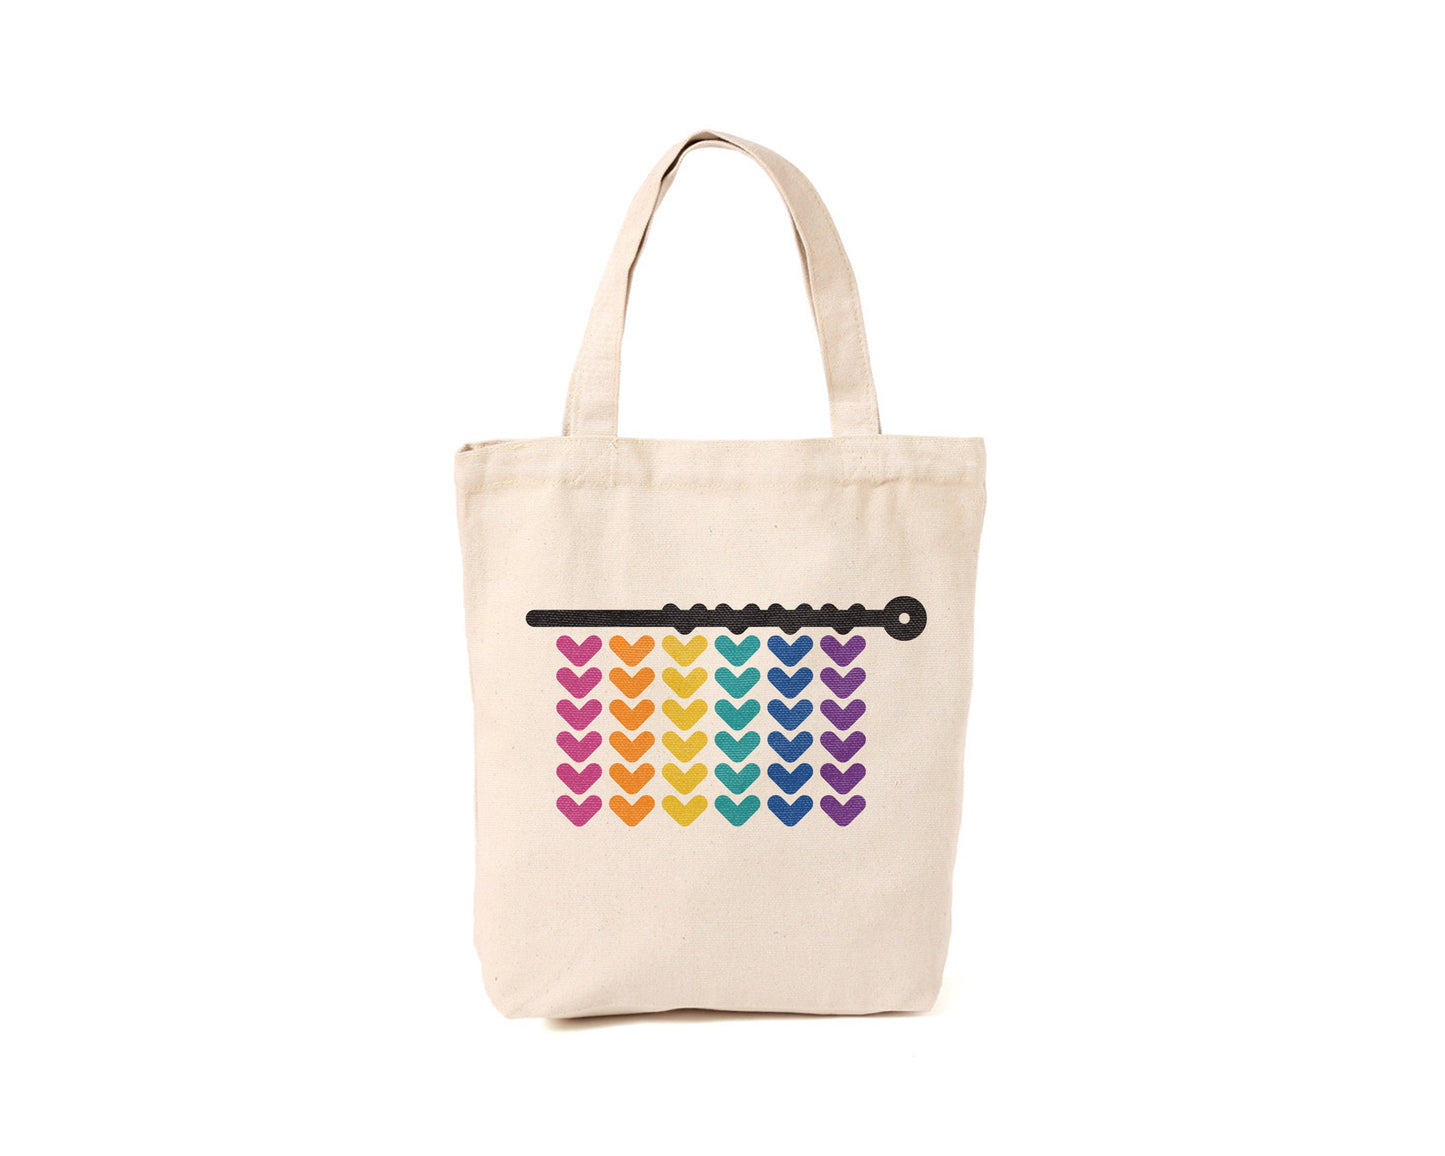 Rainbow Knitting Tote Bag